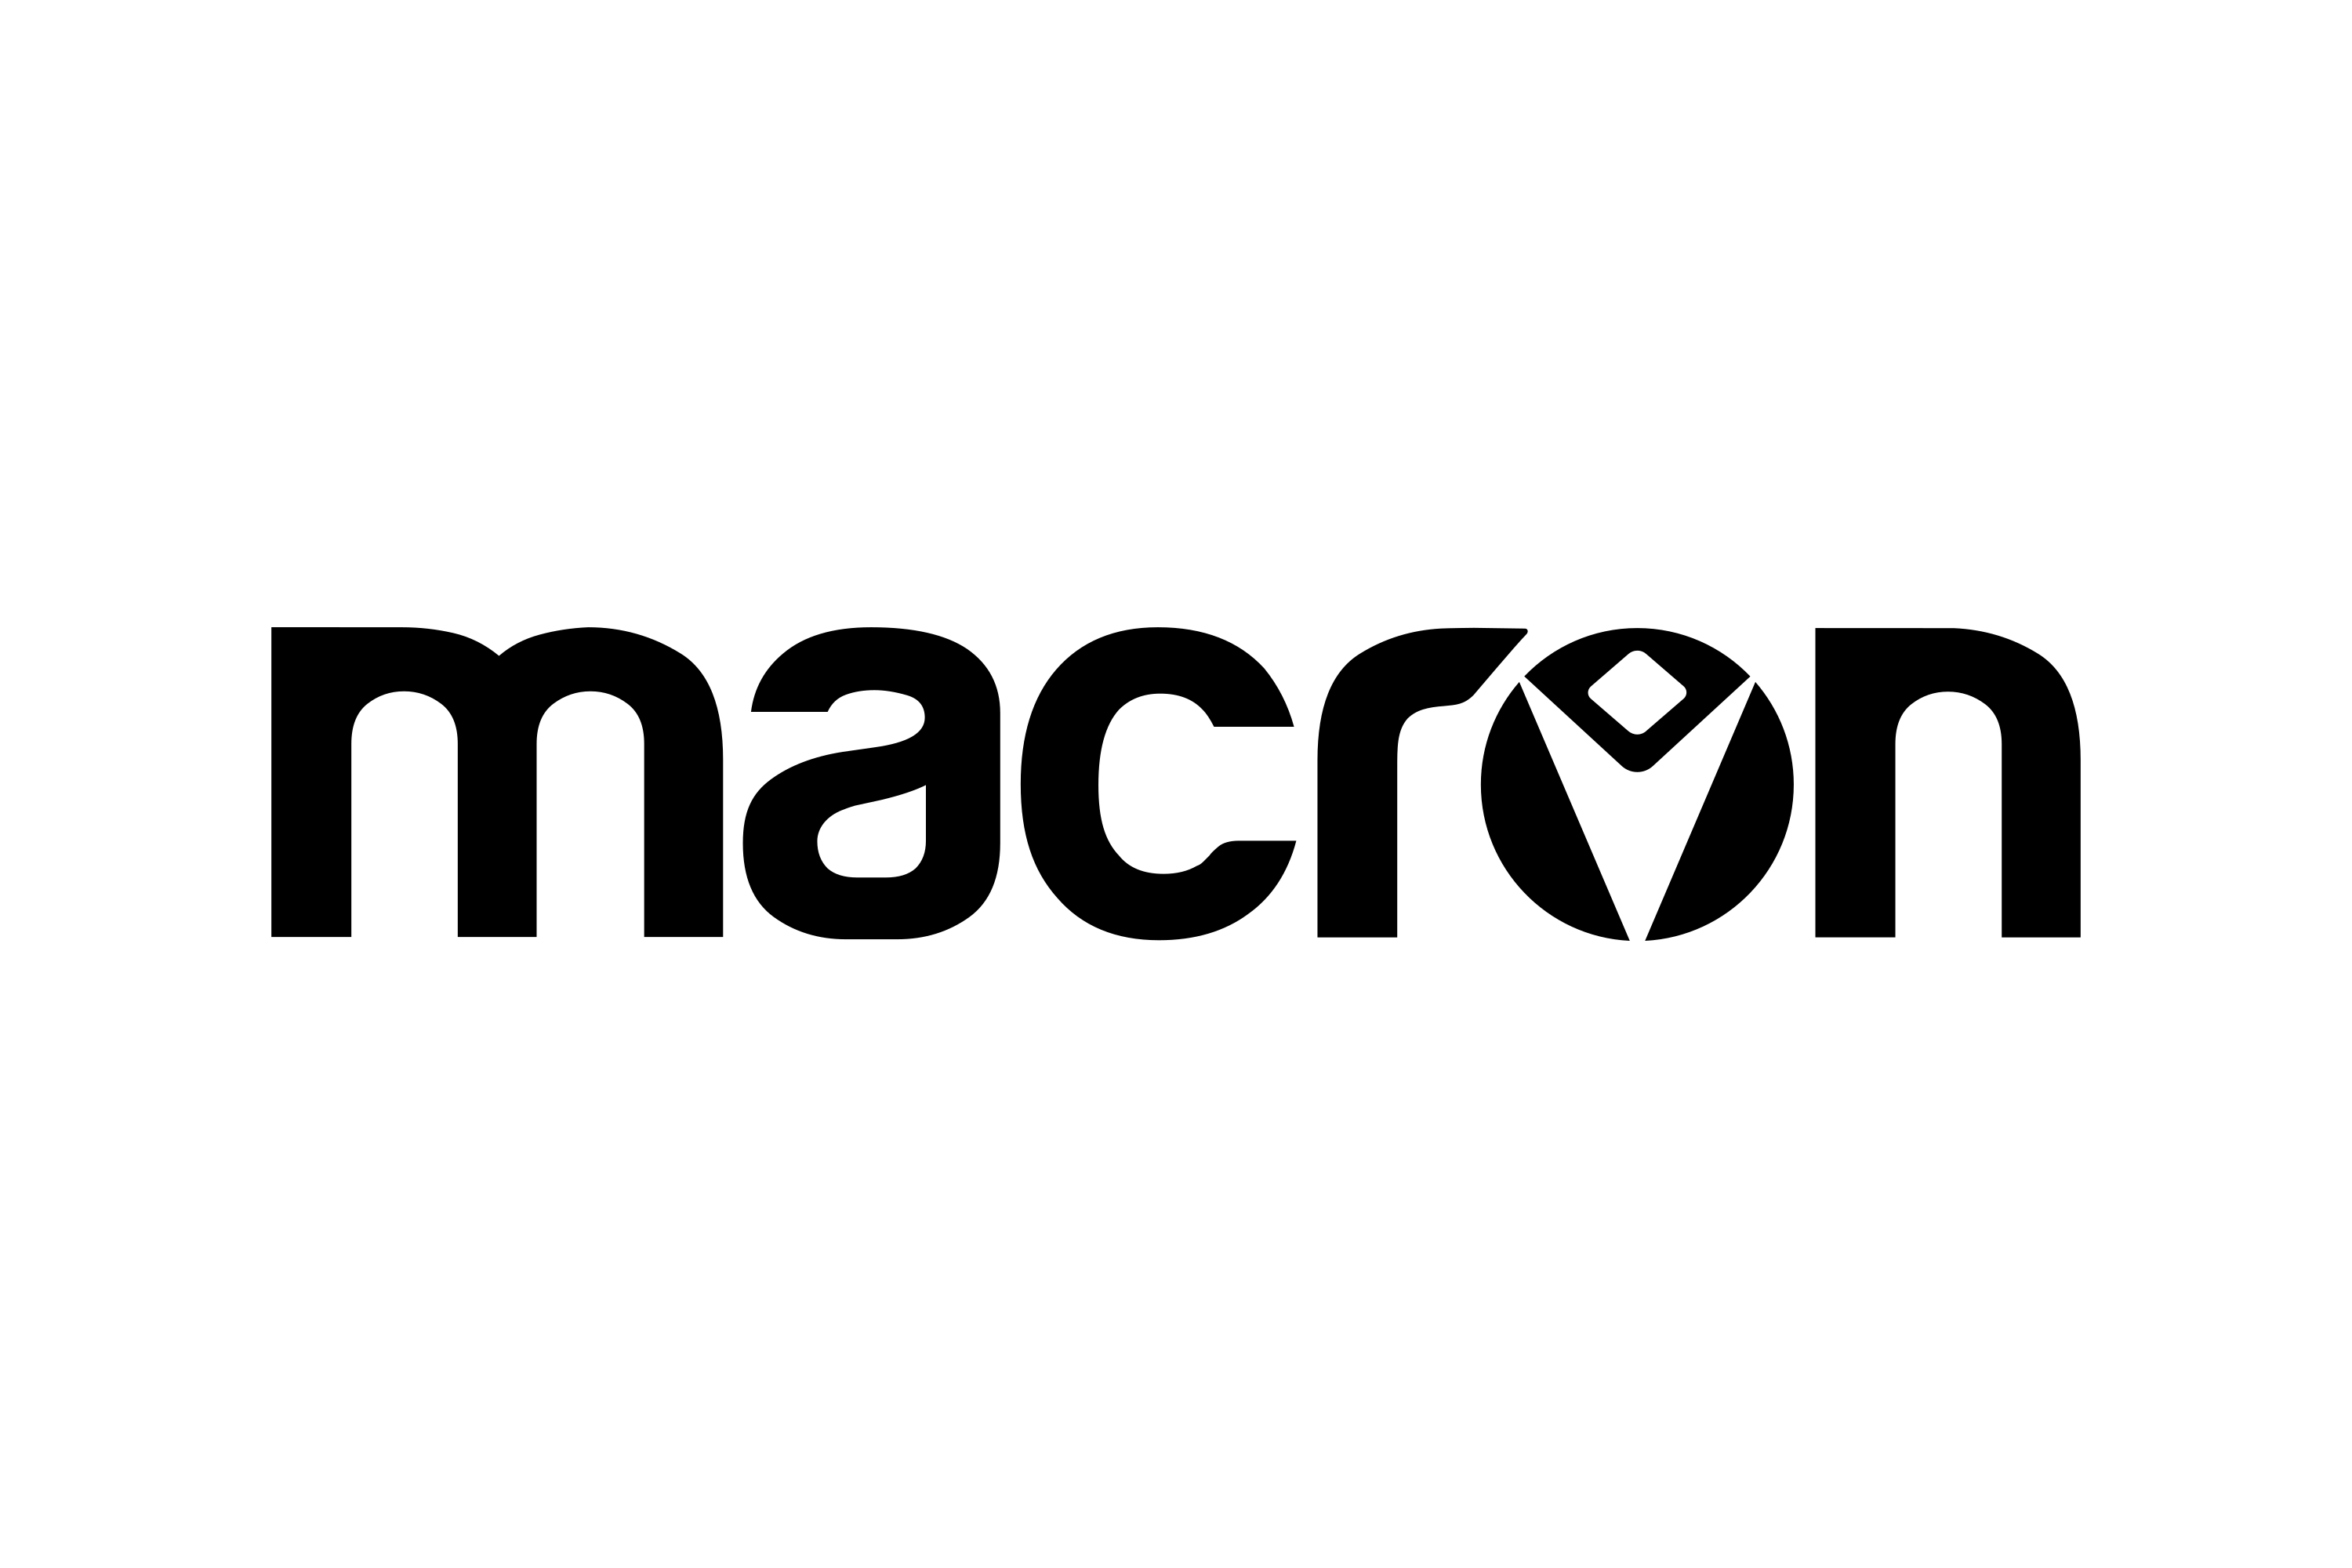 Macron Logo